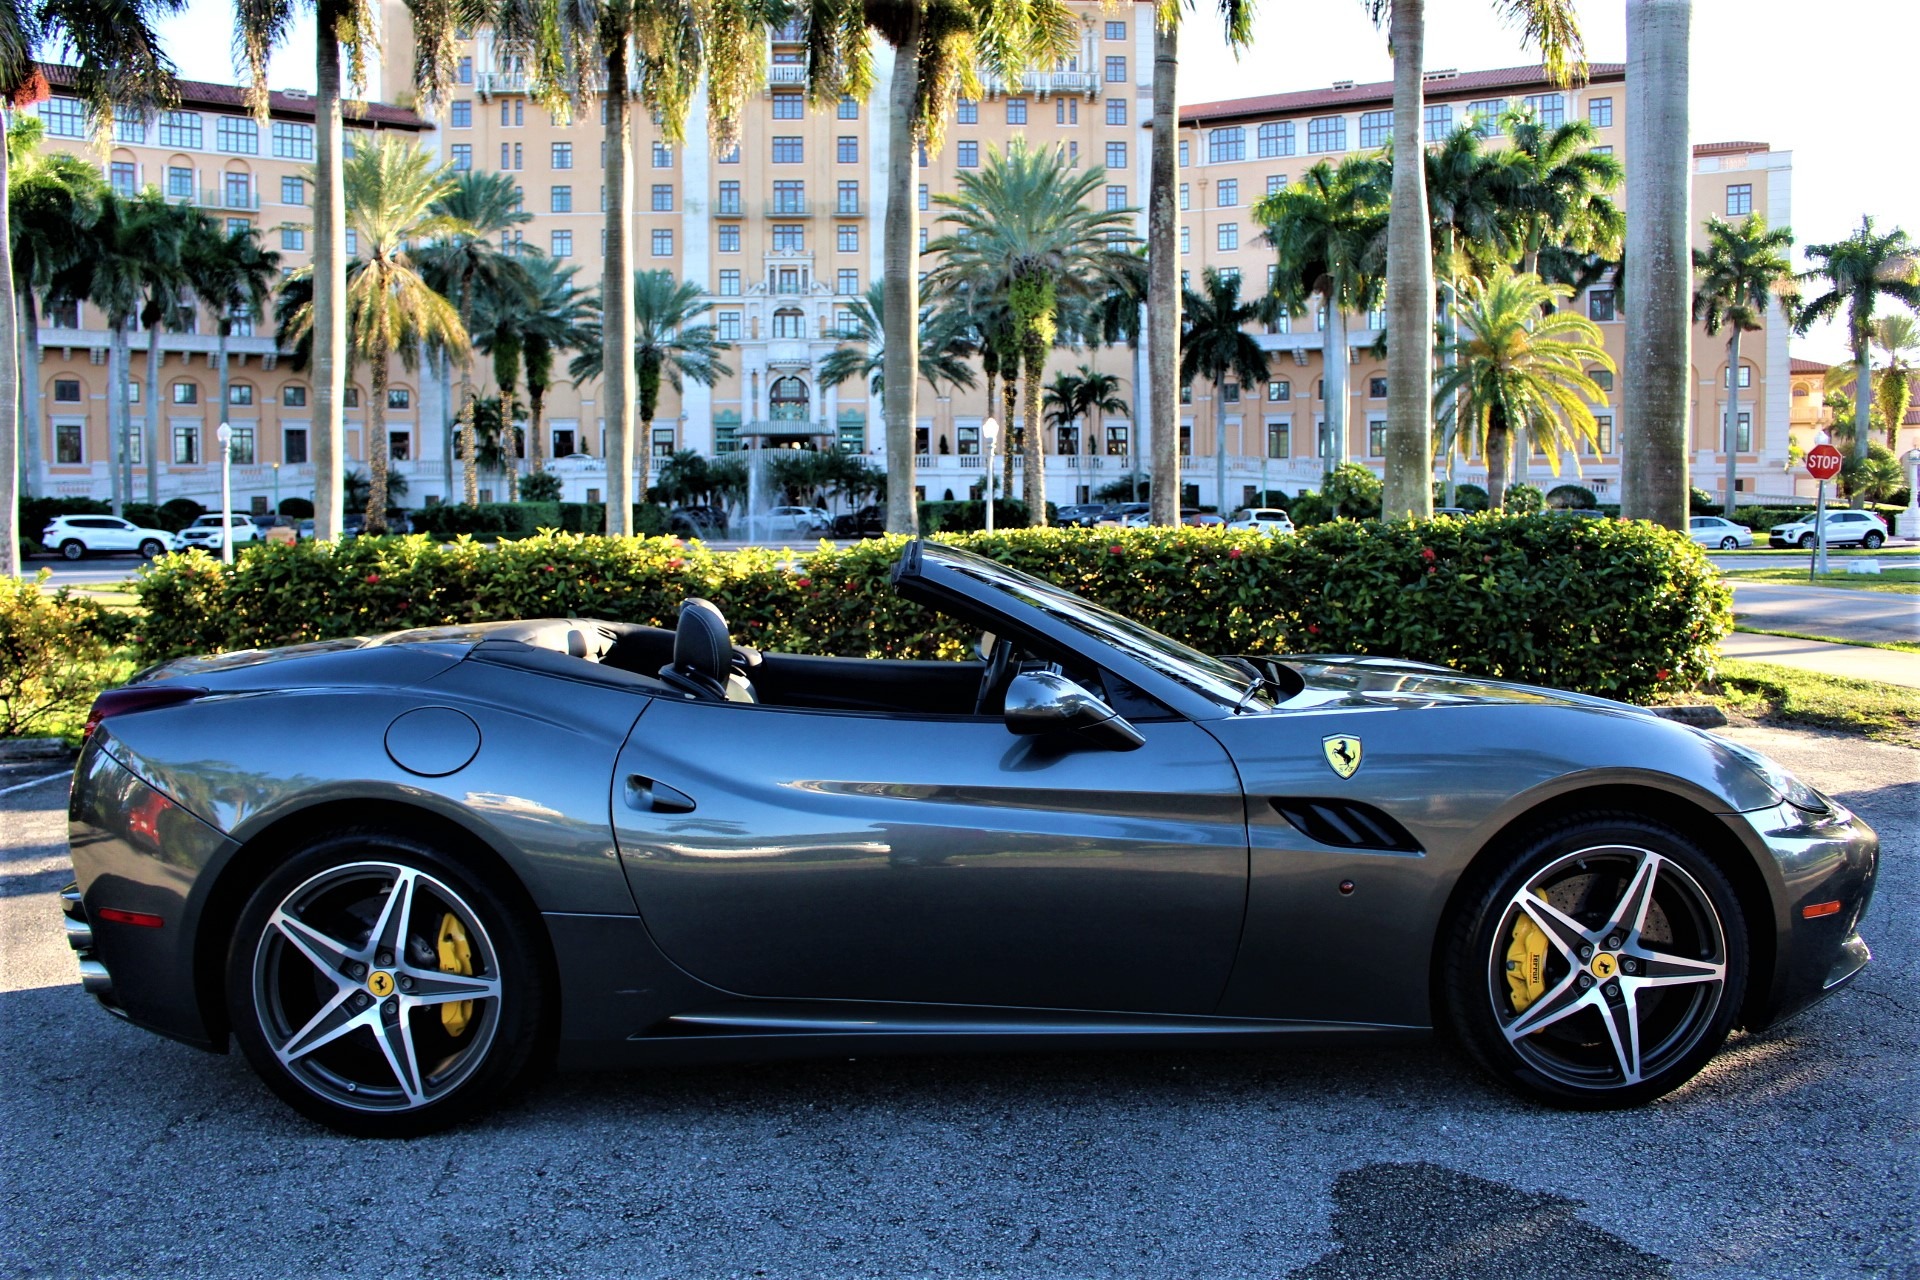 Used 2011 Ferrari California for sale Sold at The Gables Sports Cars in Miami FL 33146 1